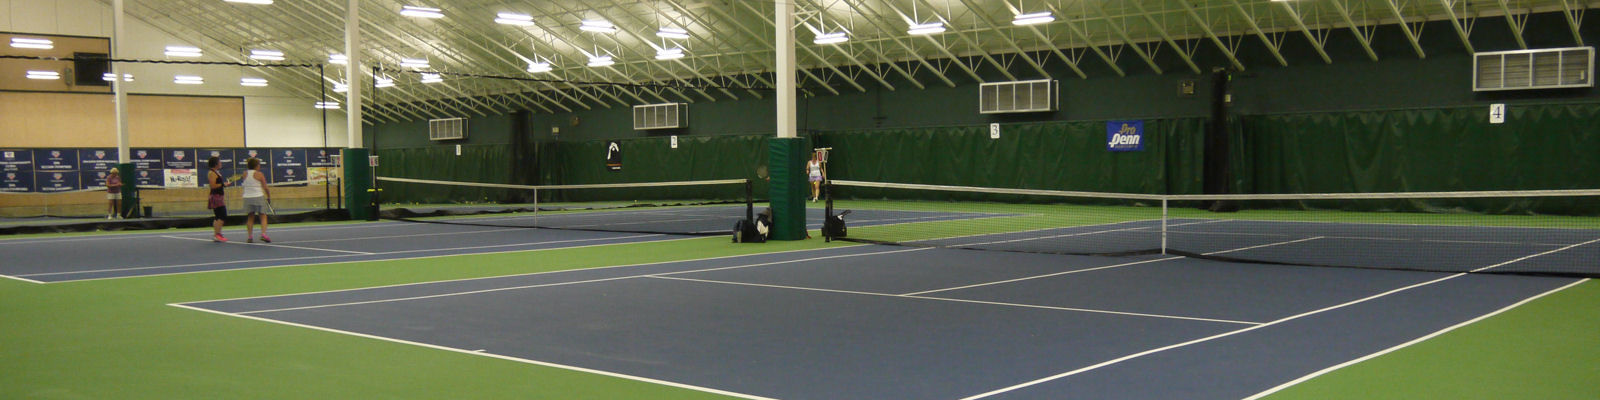 Robinswood Tennis Center - inside 